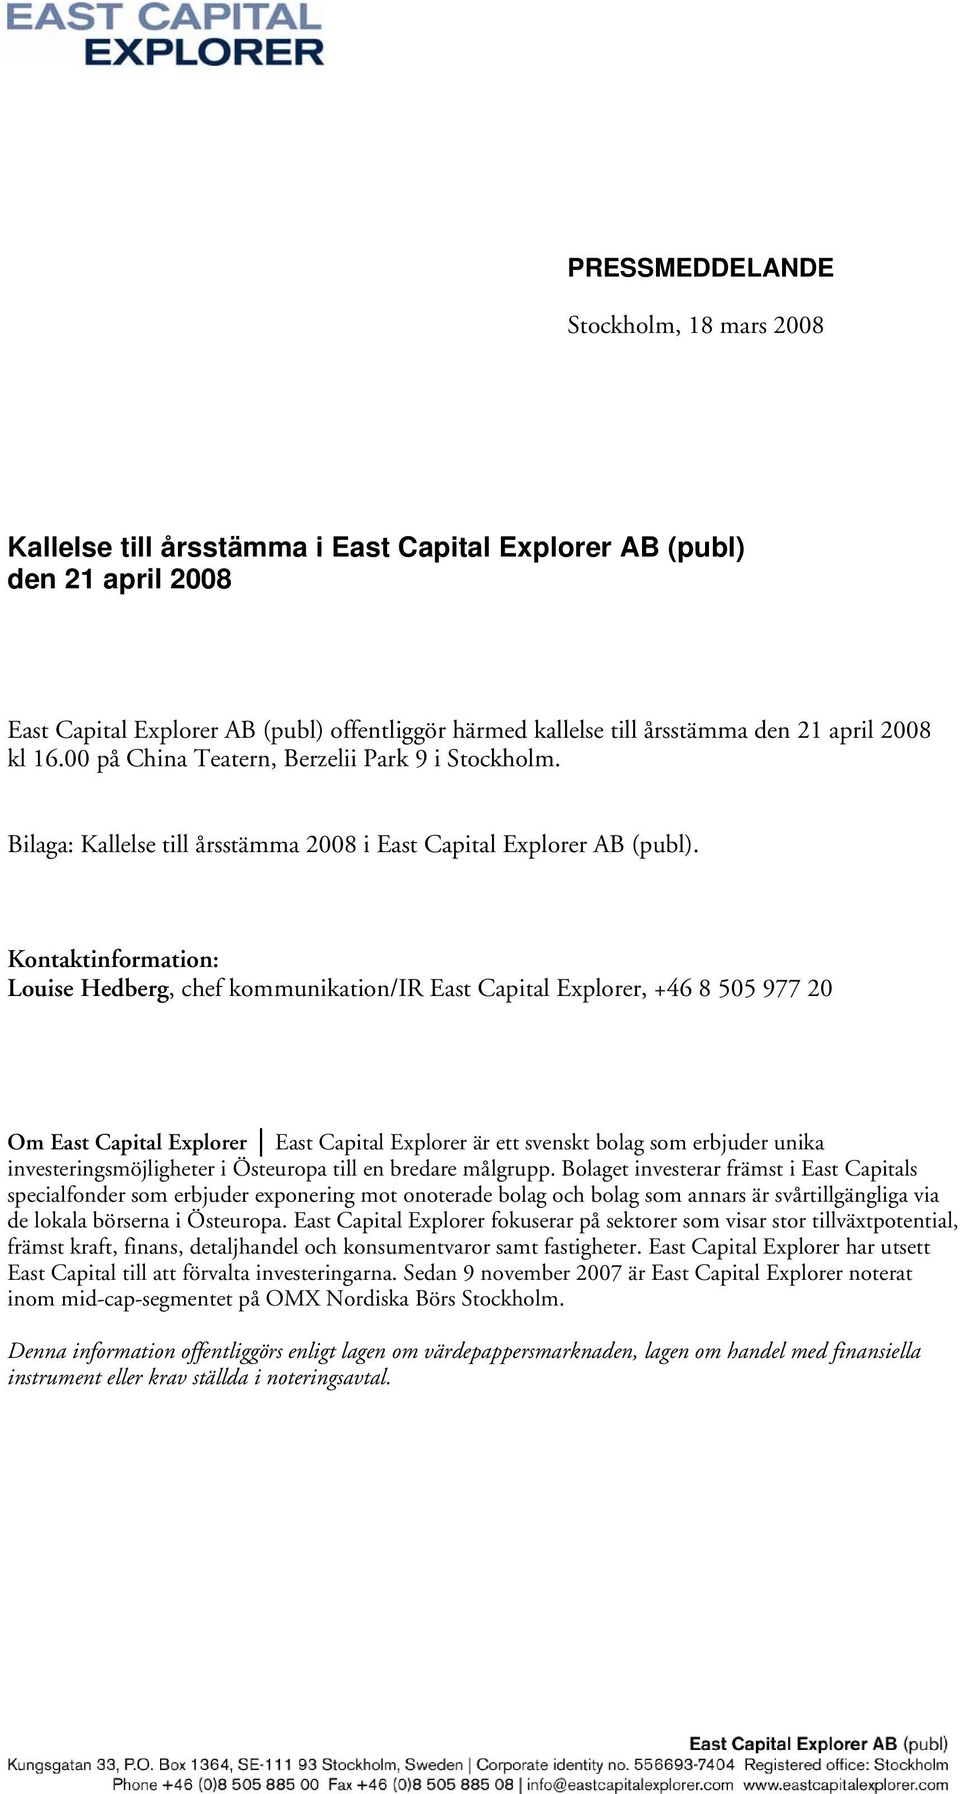 Kontaktinformation: Louise Hedberg, chef kommunikation/ir East Capital Explorer, +46 8 505 977 20 Om East Capital Explorer East Capital Explorer är ett svenskt bolag som erbjuder unika